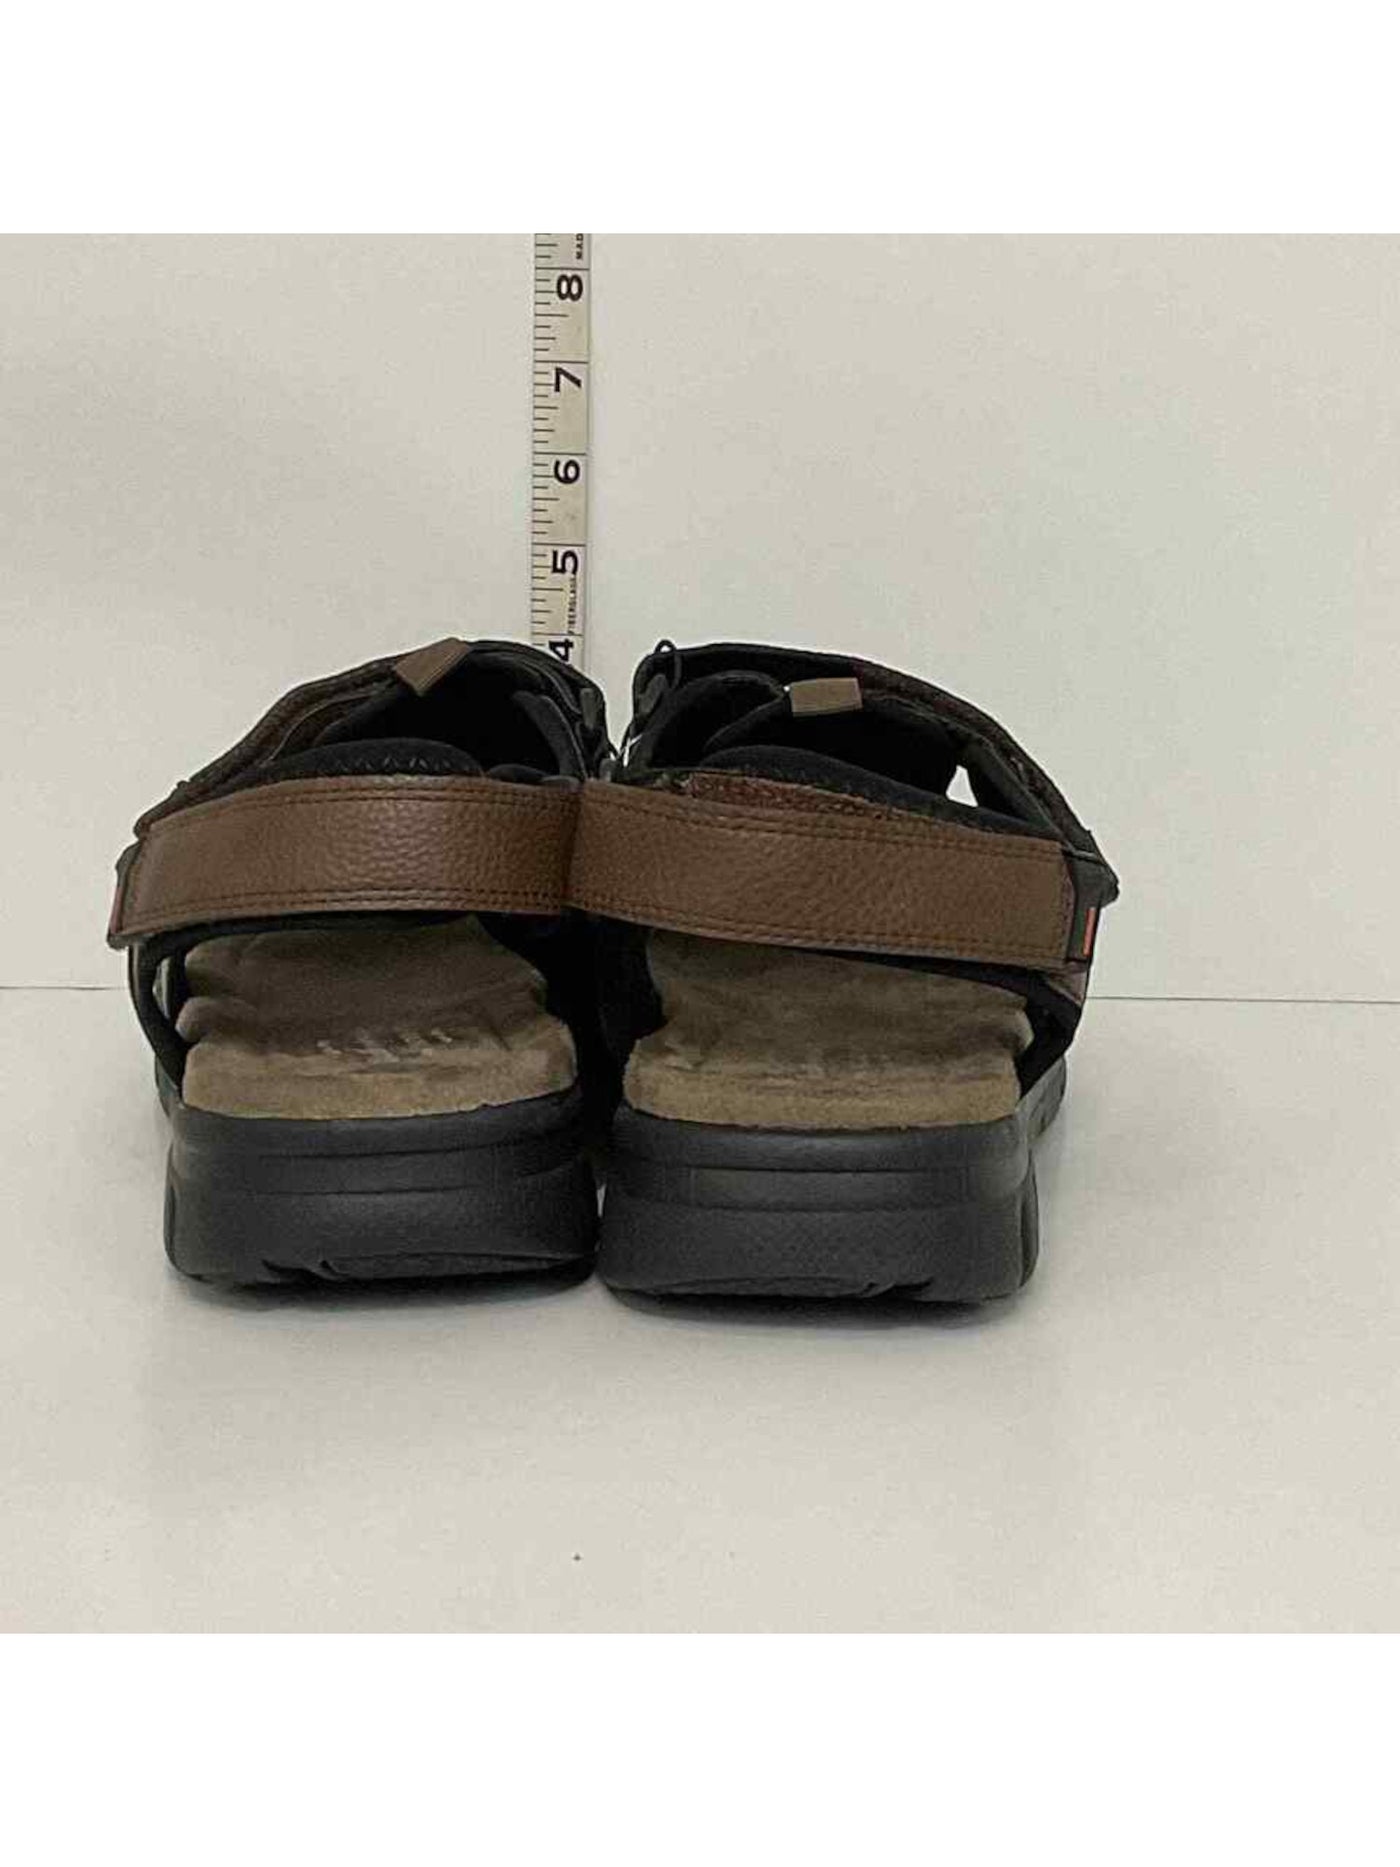 WEATHERPROOF VINTAGE Mens Brown Caged Cushioned Adjustable Cory Round Toe Platform Sandals Shoes 11 M